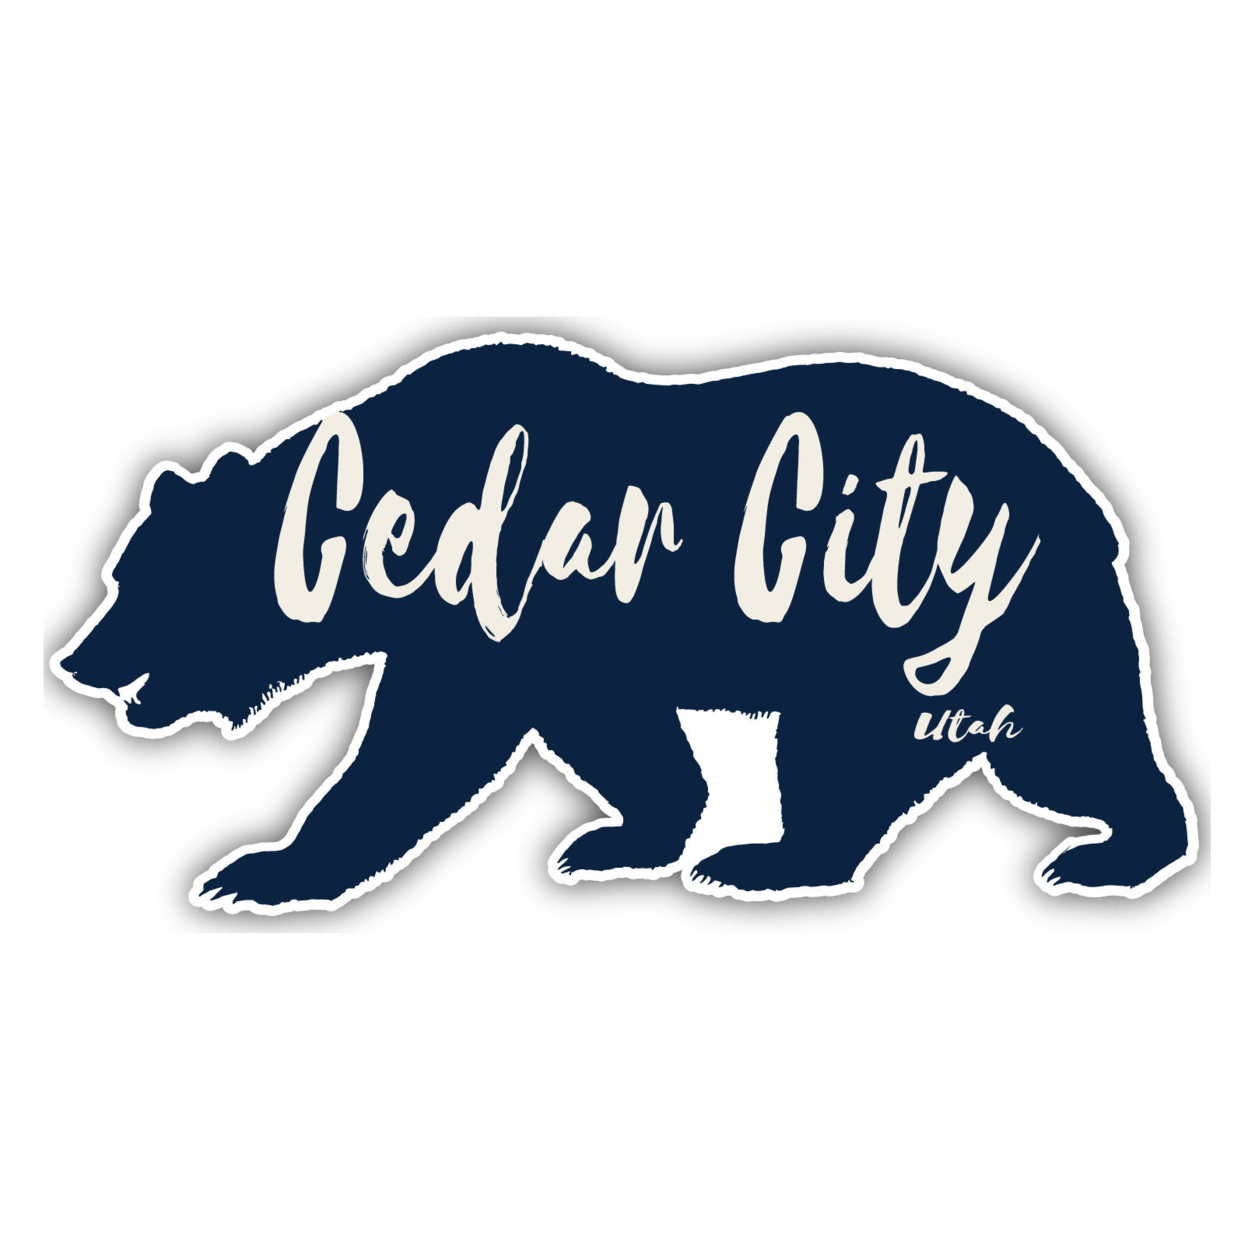 Cedar City Utah Souvenir Decorative Stickers (Choose Theme And Size) - Single Unit, 6-Inch, Bear